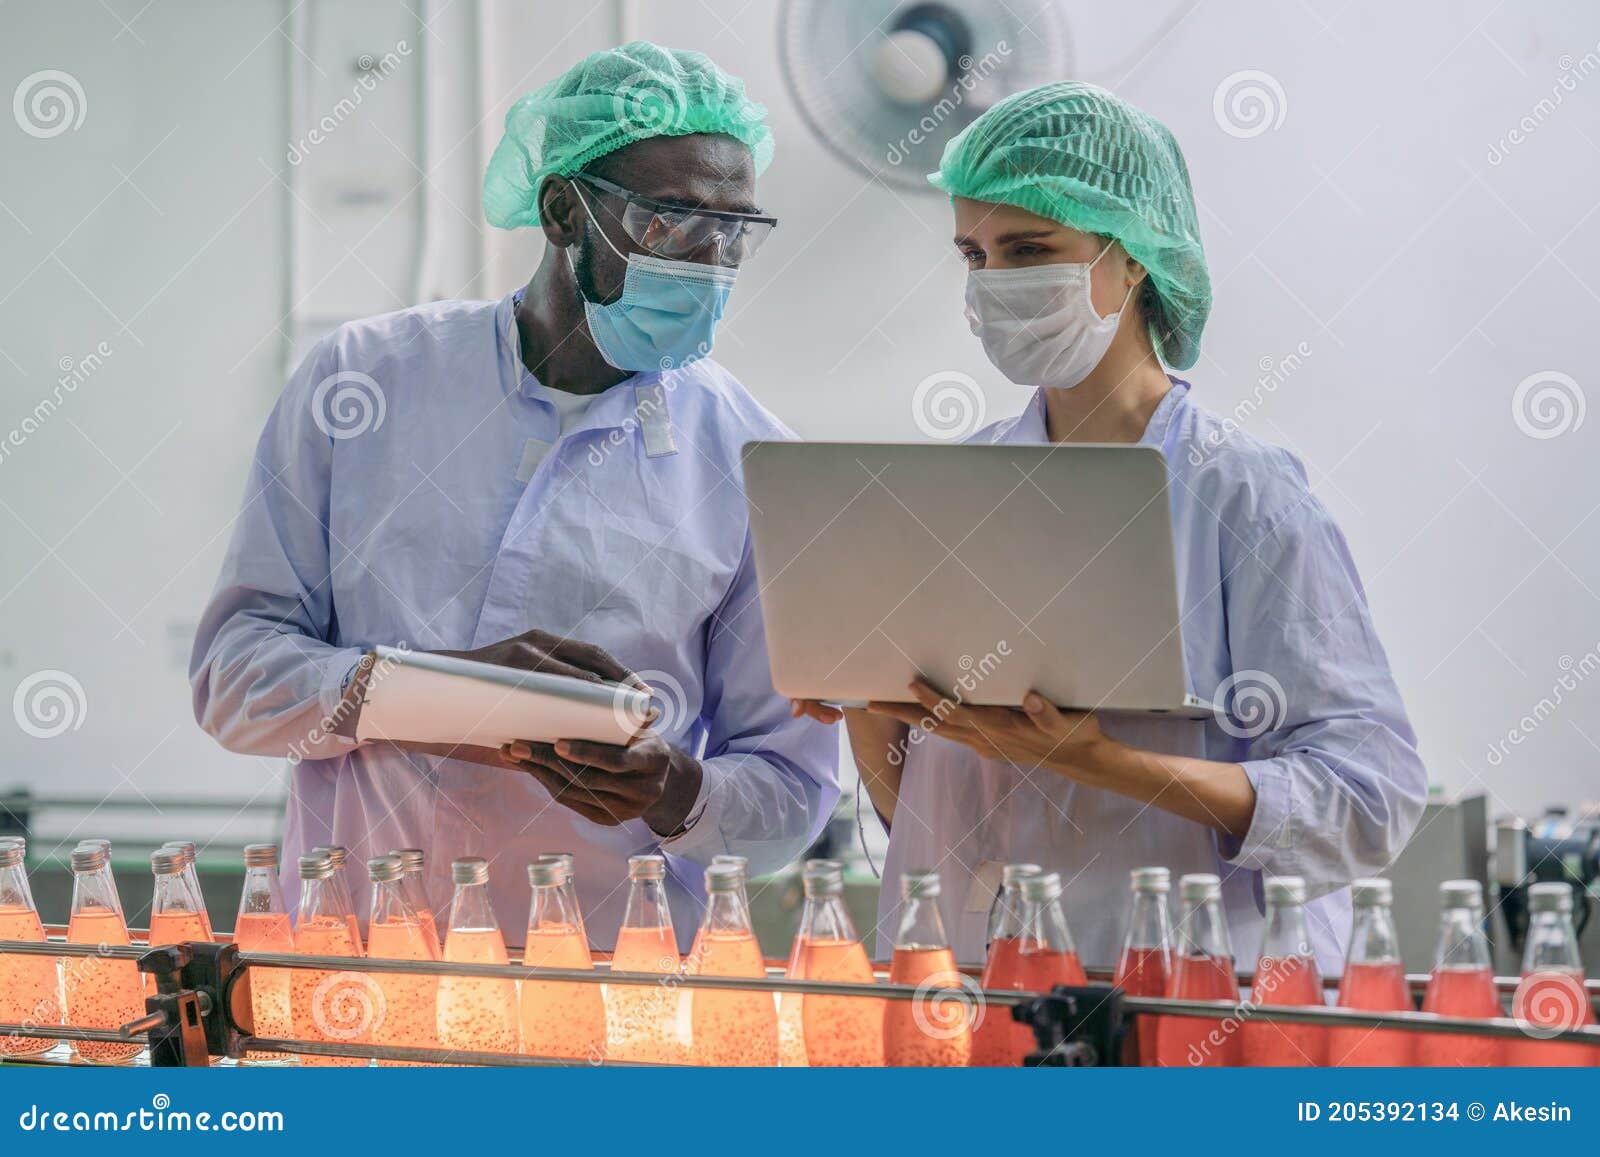 production line supervisor and worker work together in beverage production line